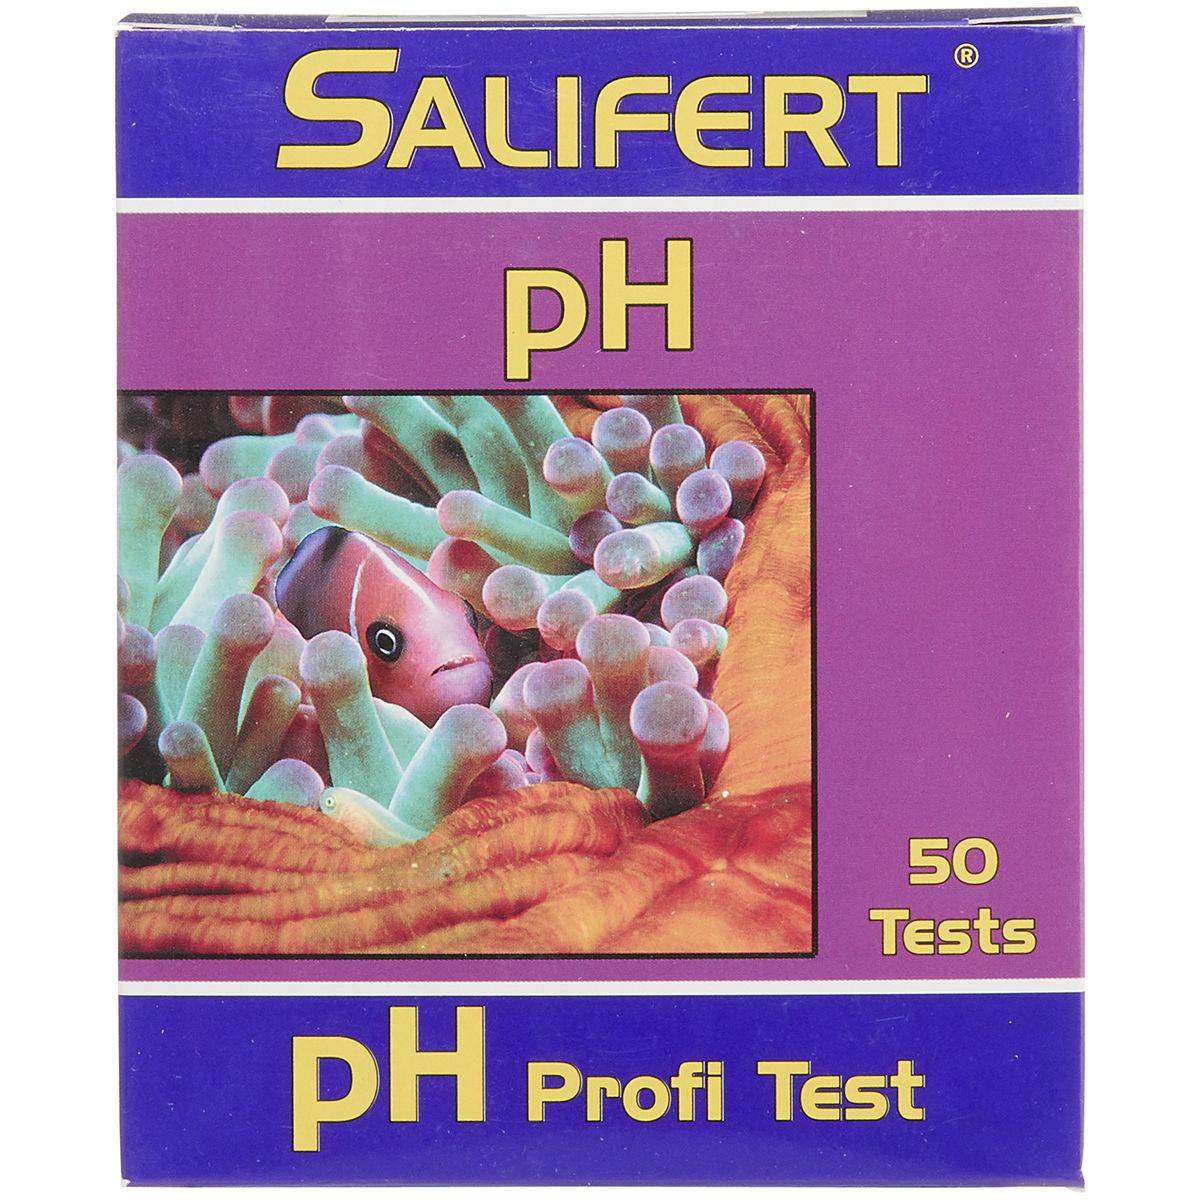 Salifert pH Aquarium Test Kit - Salifert